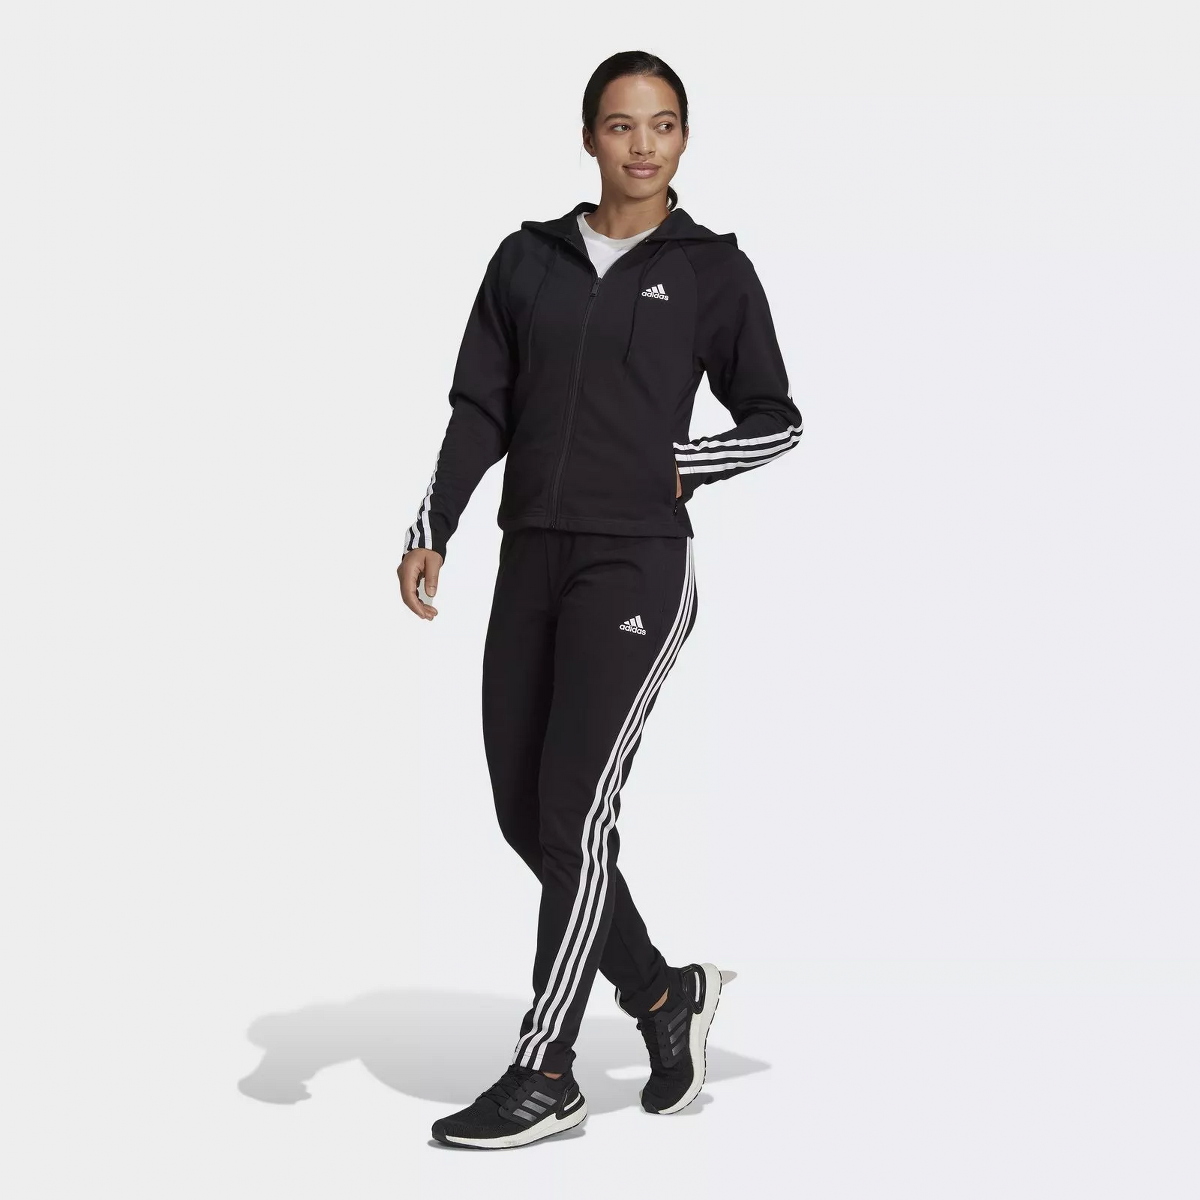 Trening Dama Adidas Performance W Energize Ts Negru